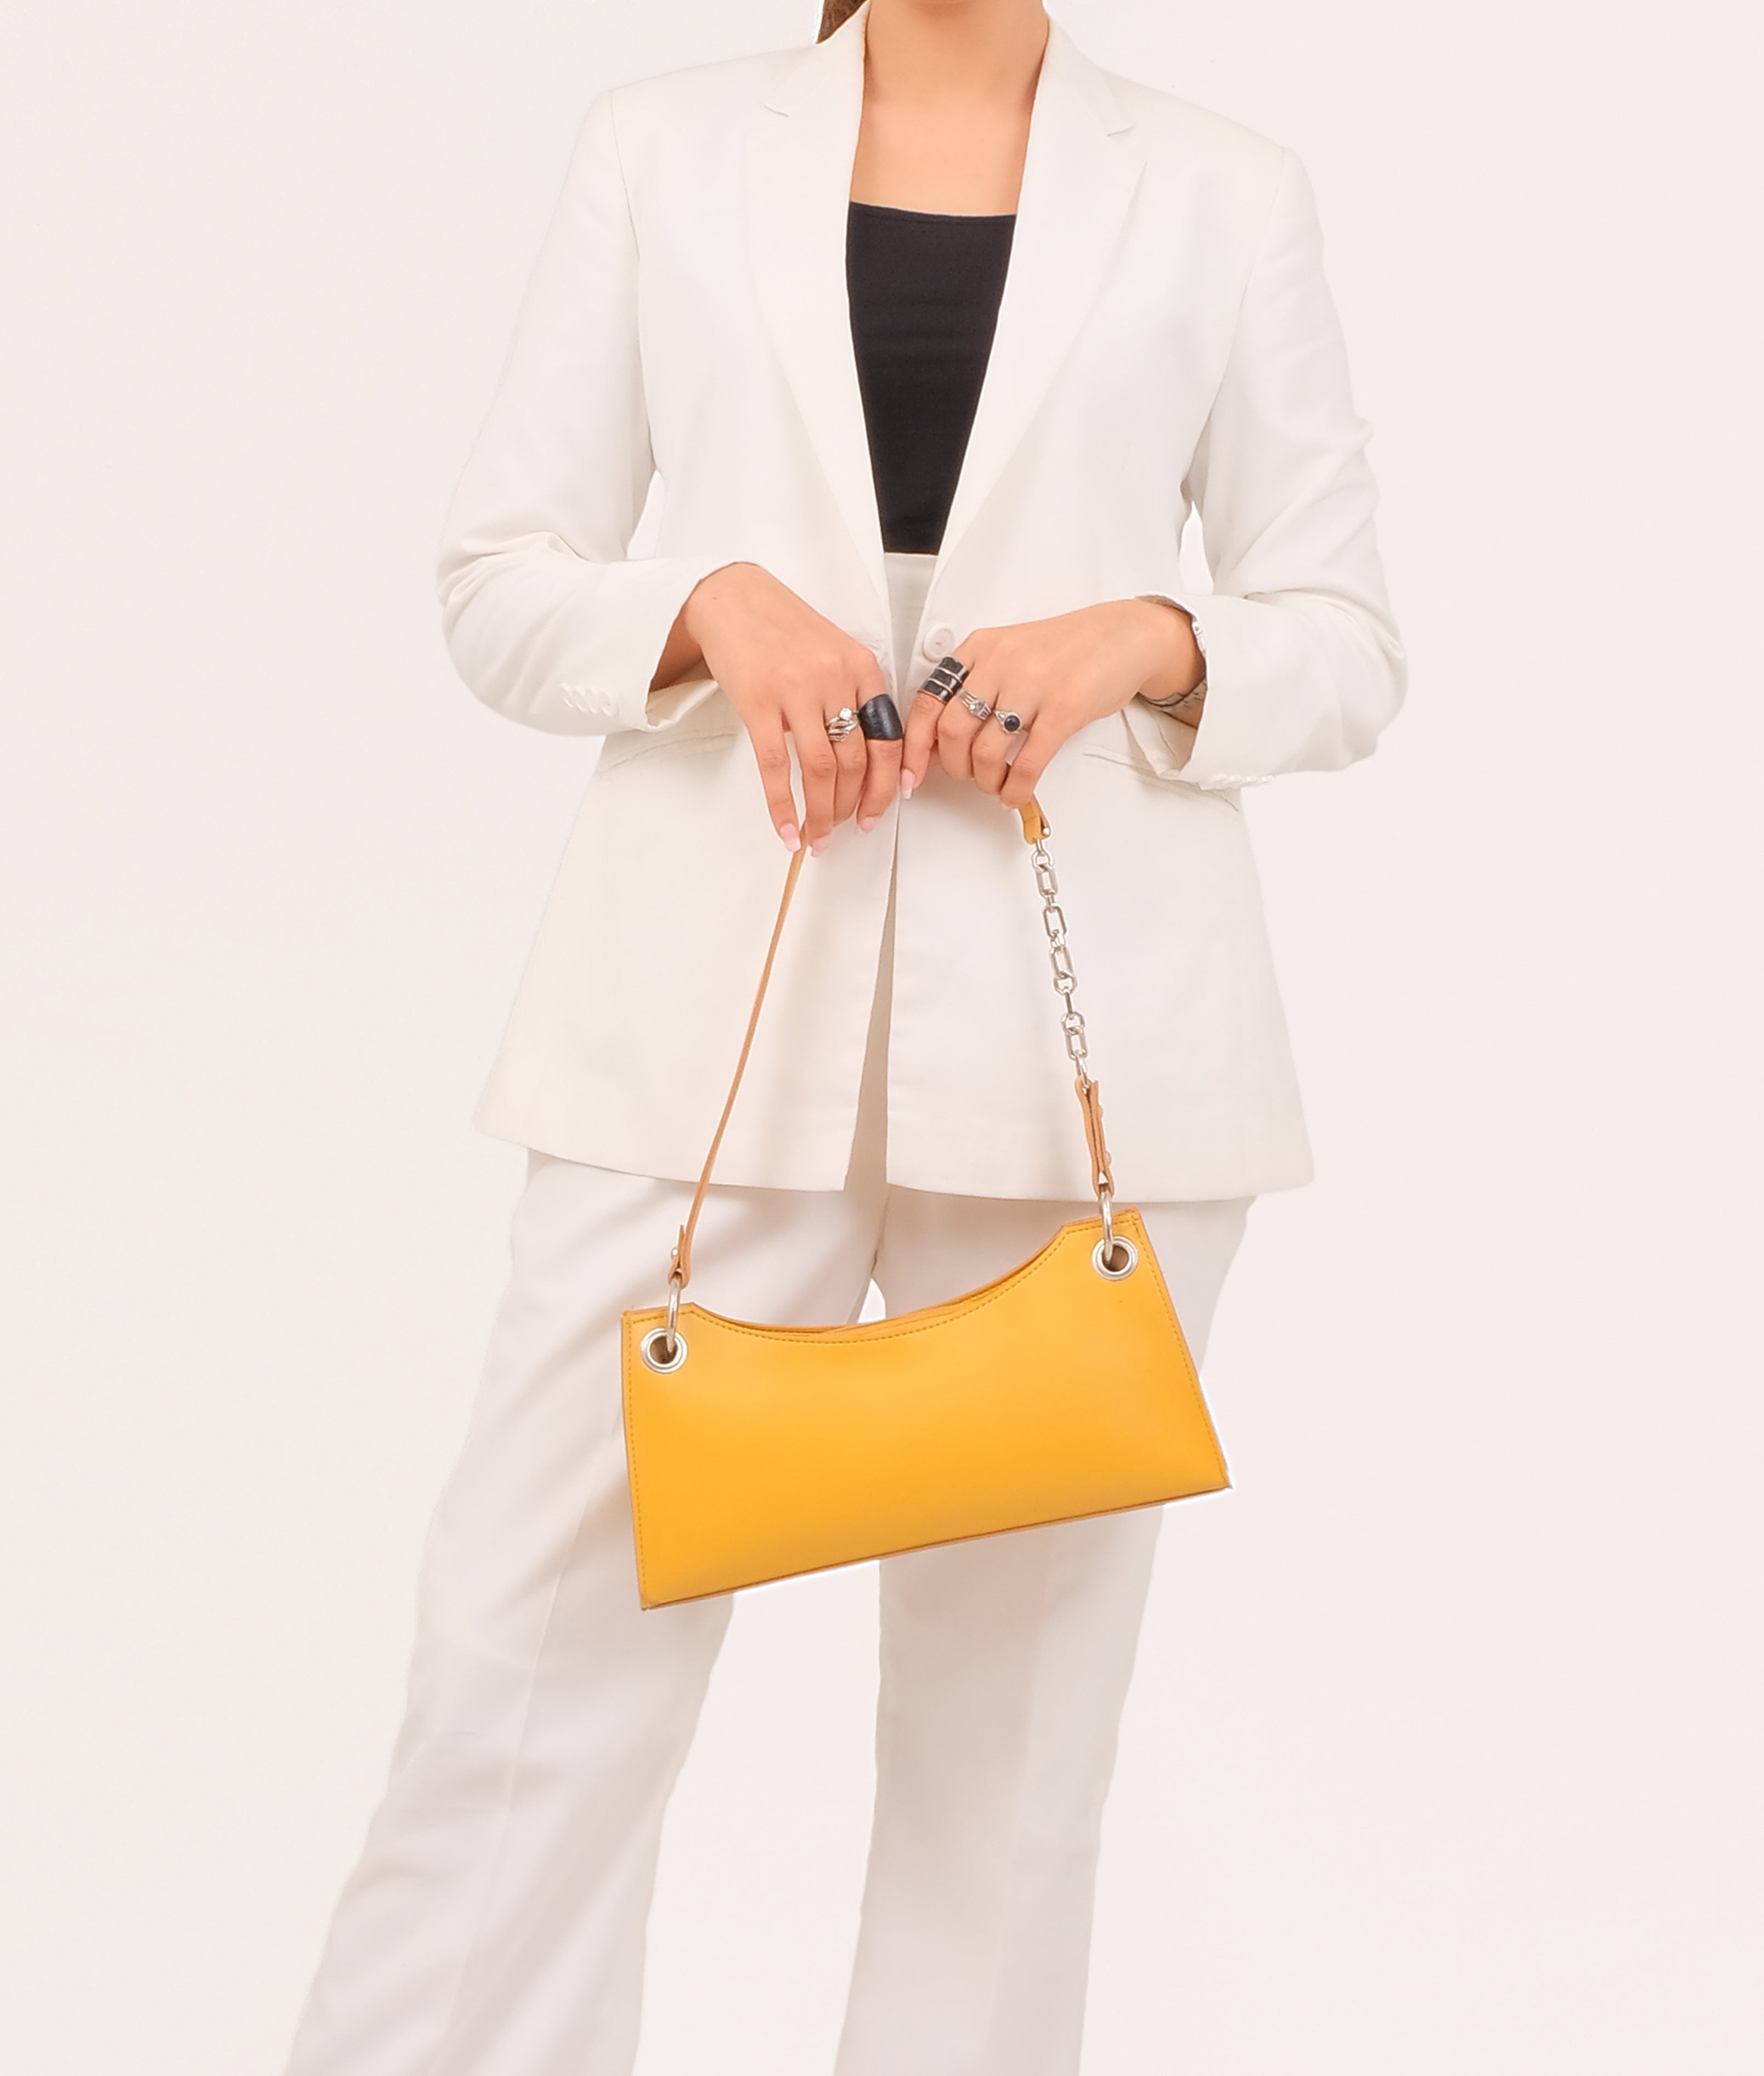 Yellow elongated chain handle purse